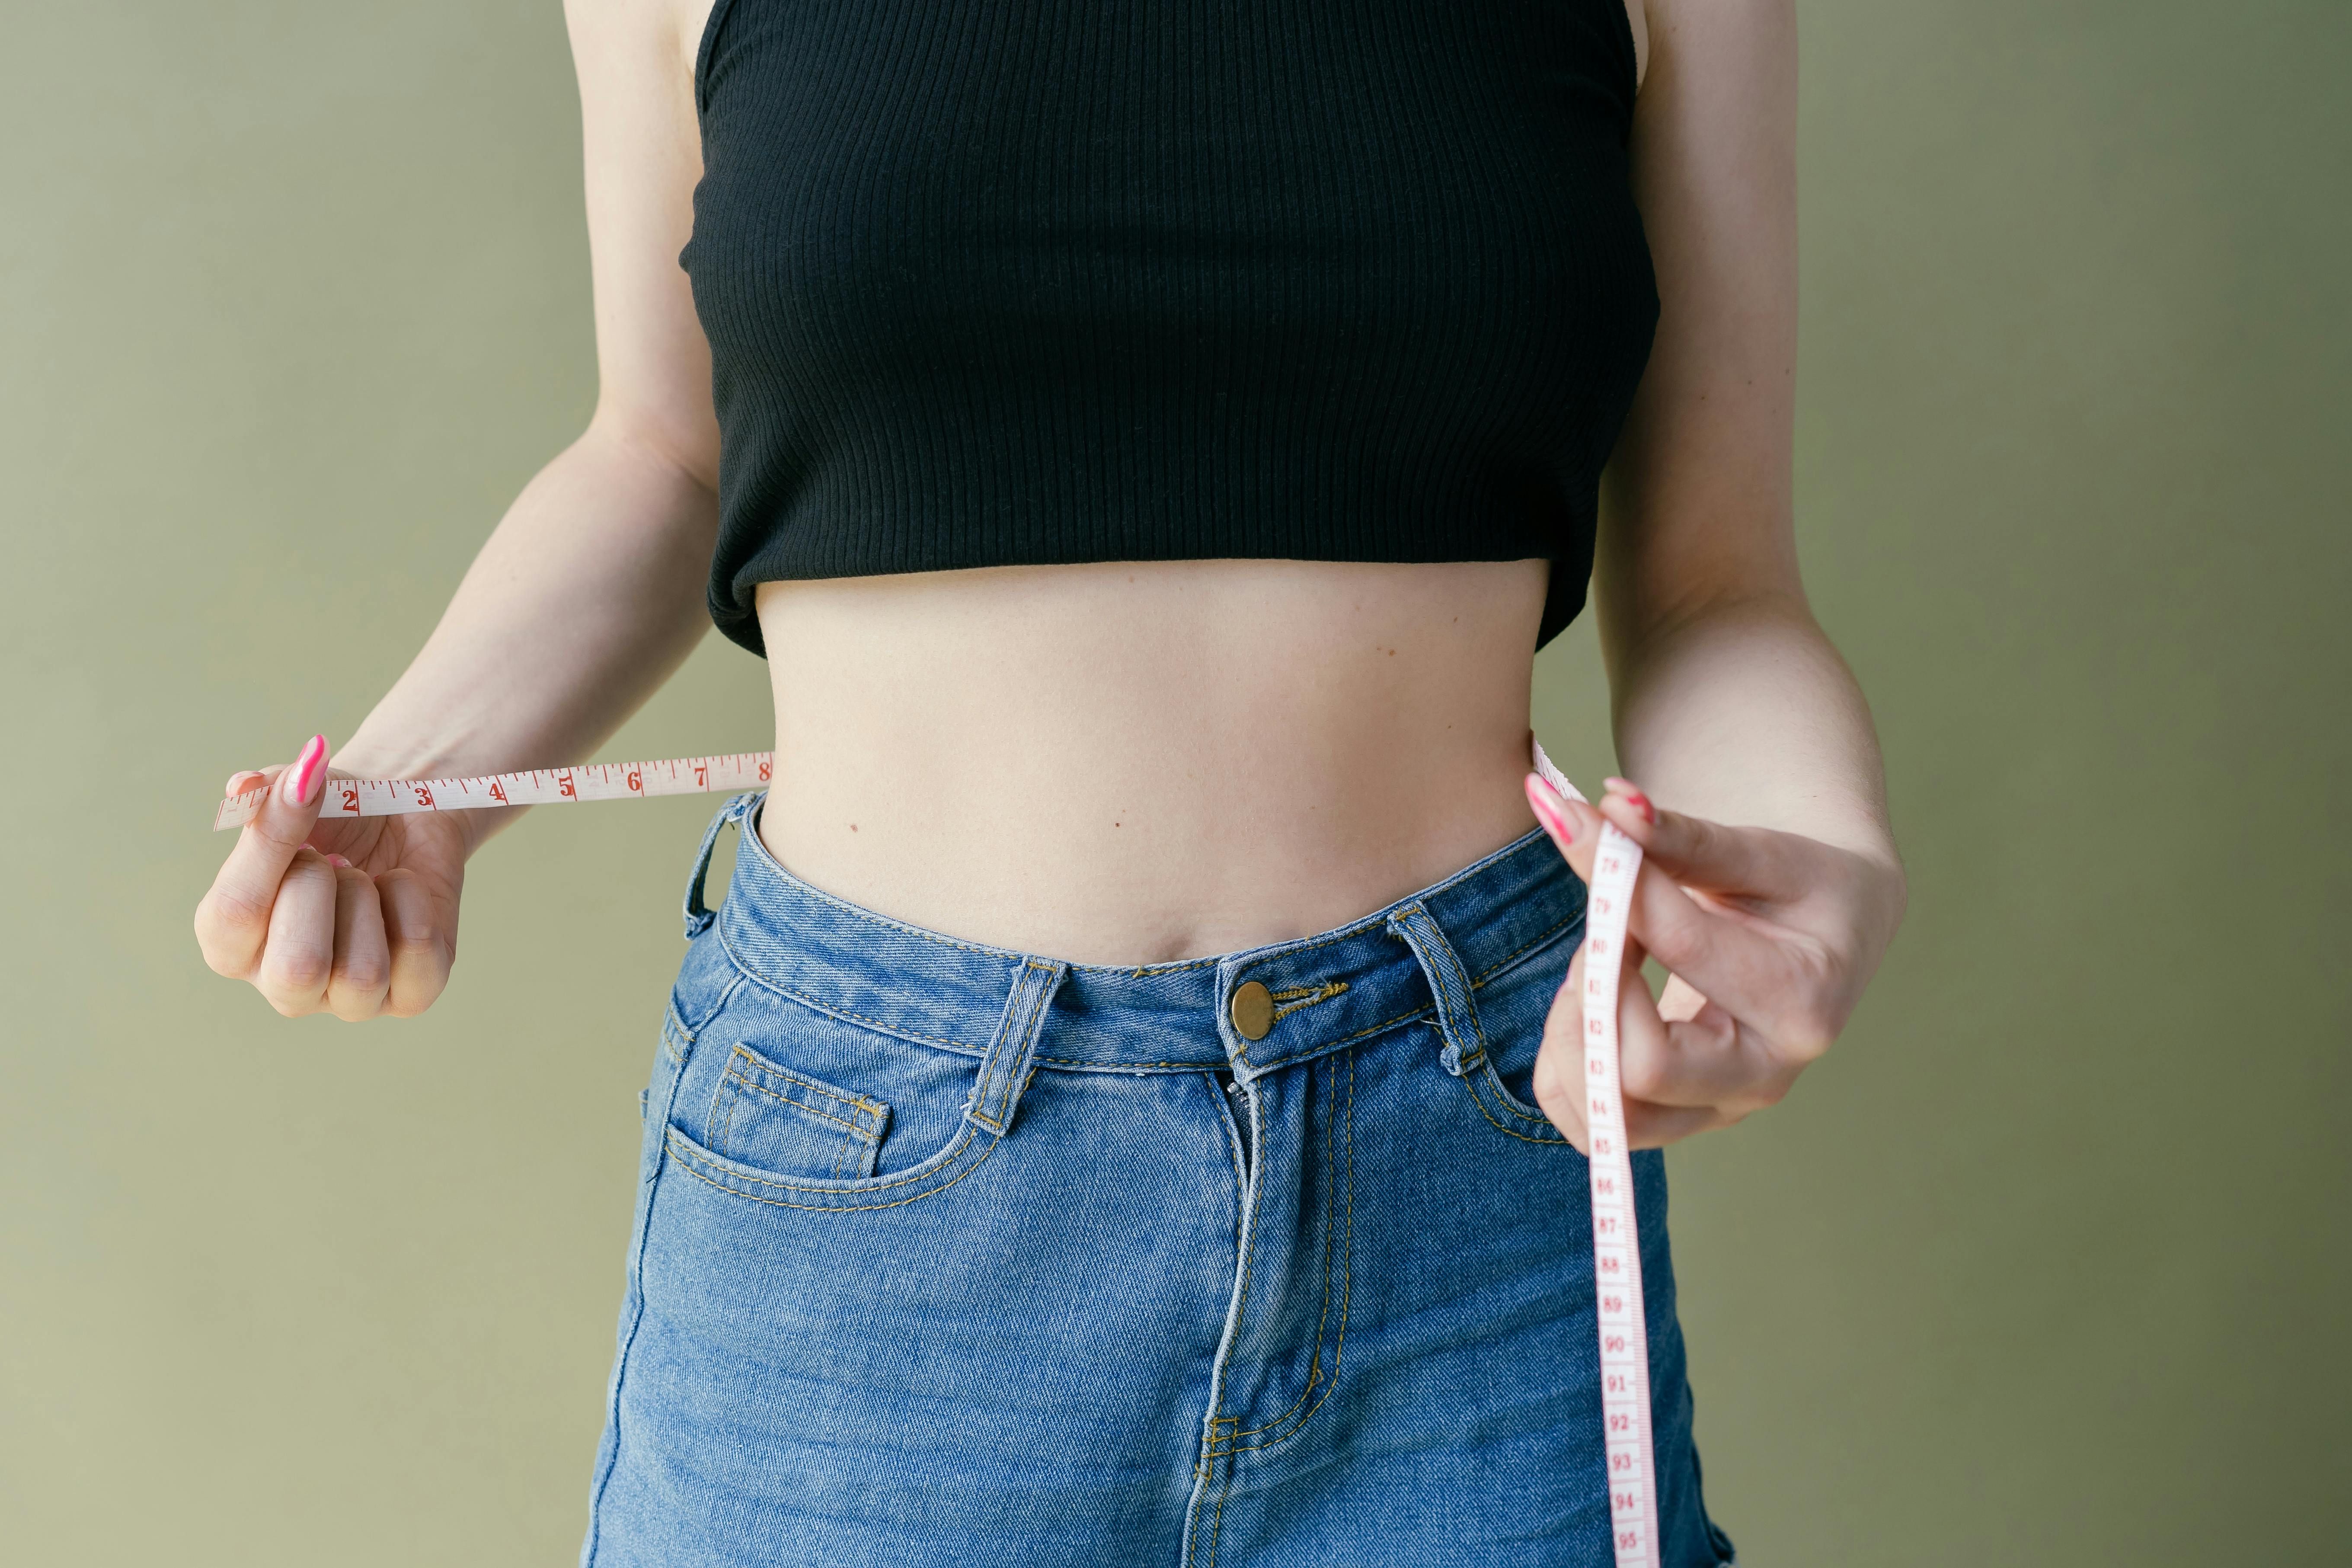 Woman measuring her waistline, highlighting the link between weight loss and sleep apnea improvement